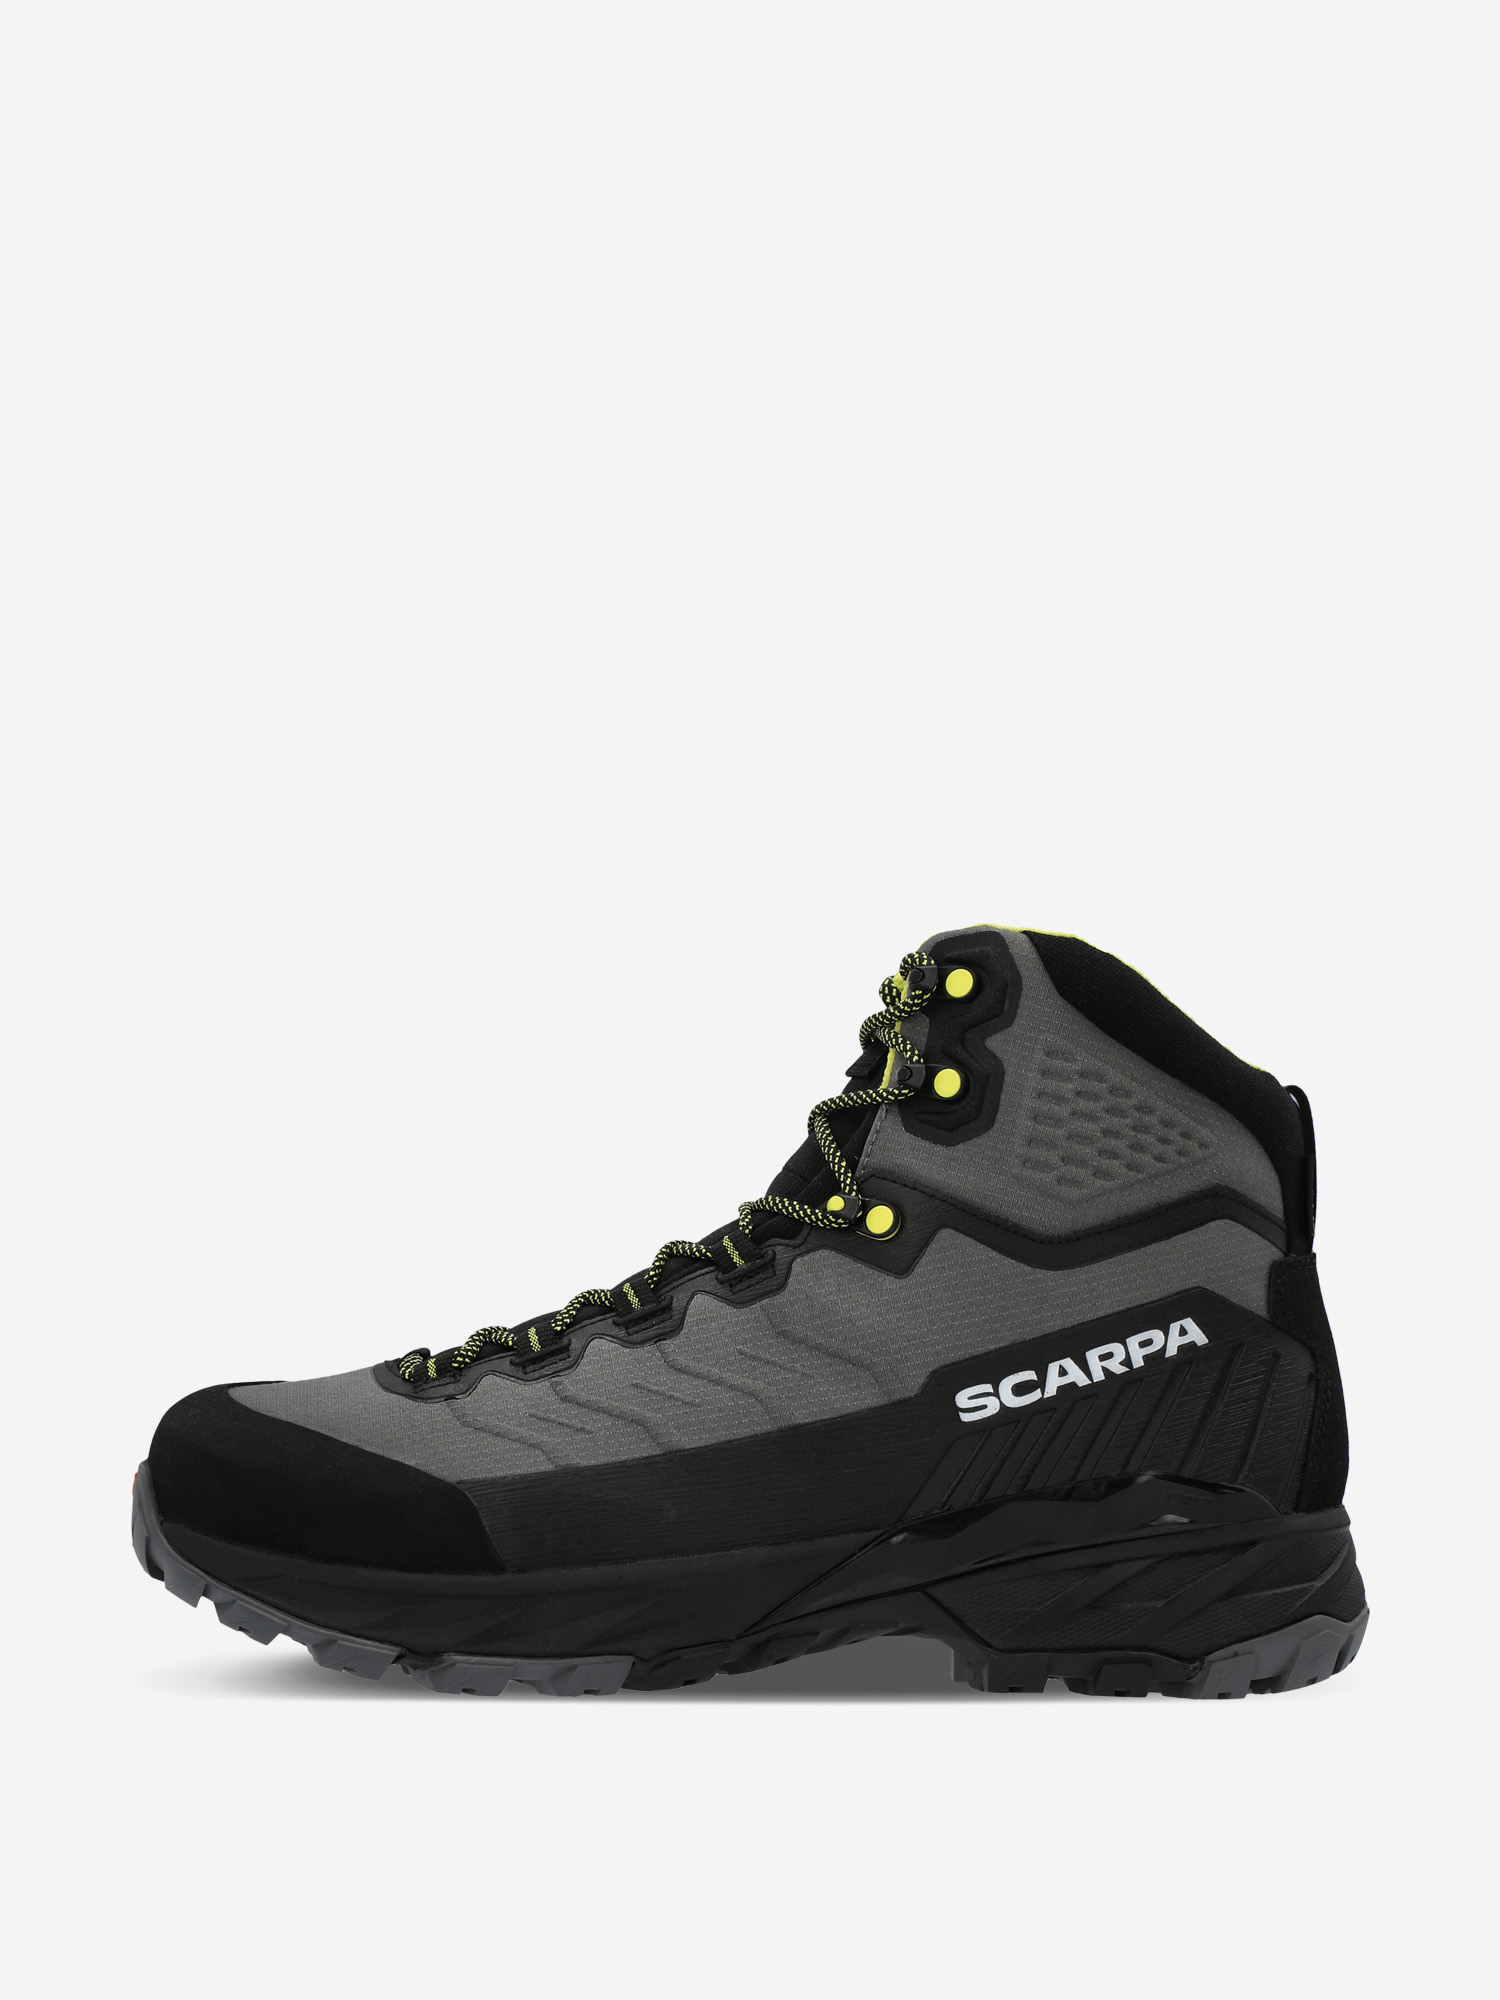 Ботинки мужские Scarpa Rush TRK LT GTX, Серый ботинки мужские scarpa marmolada trek hd серый